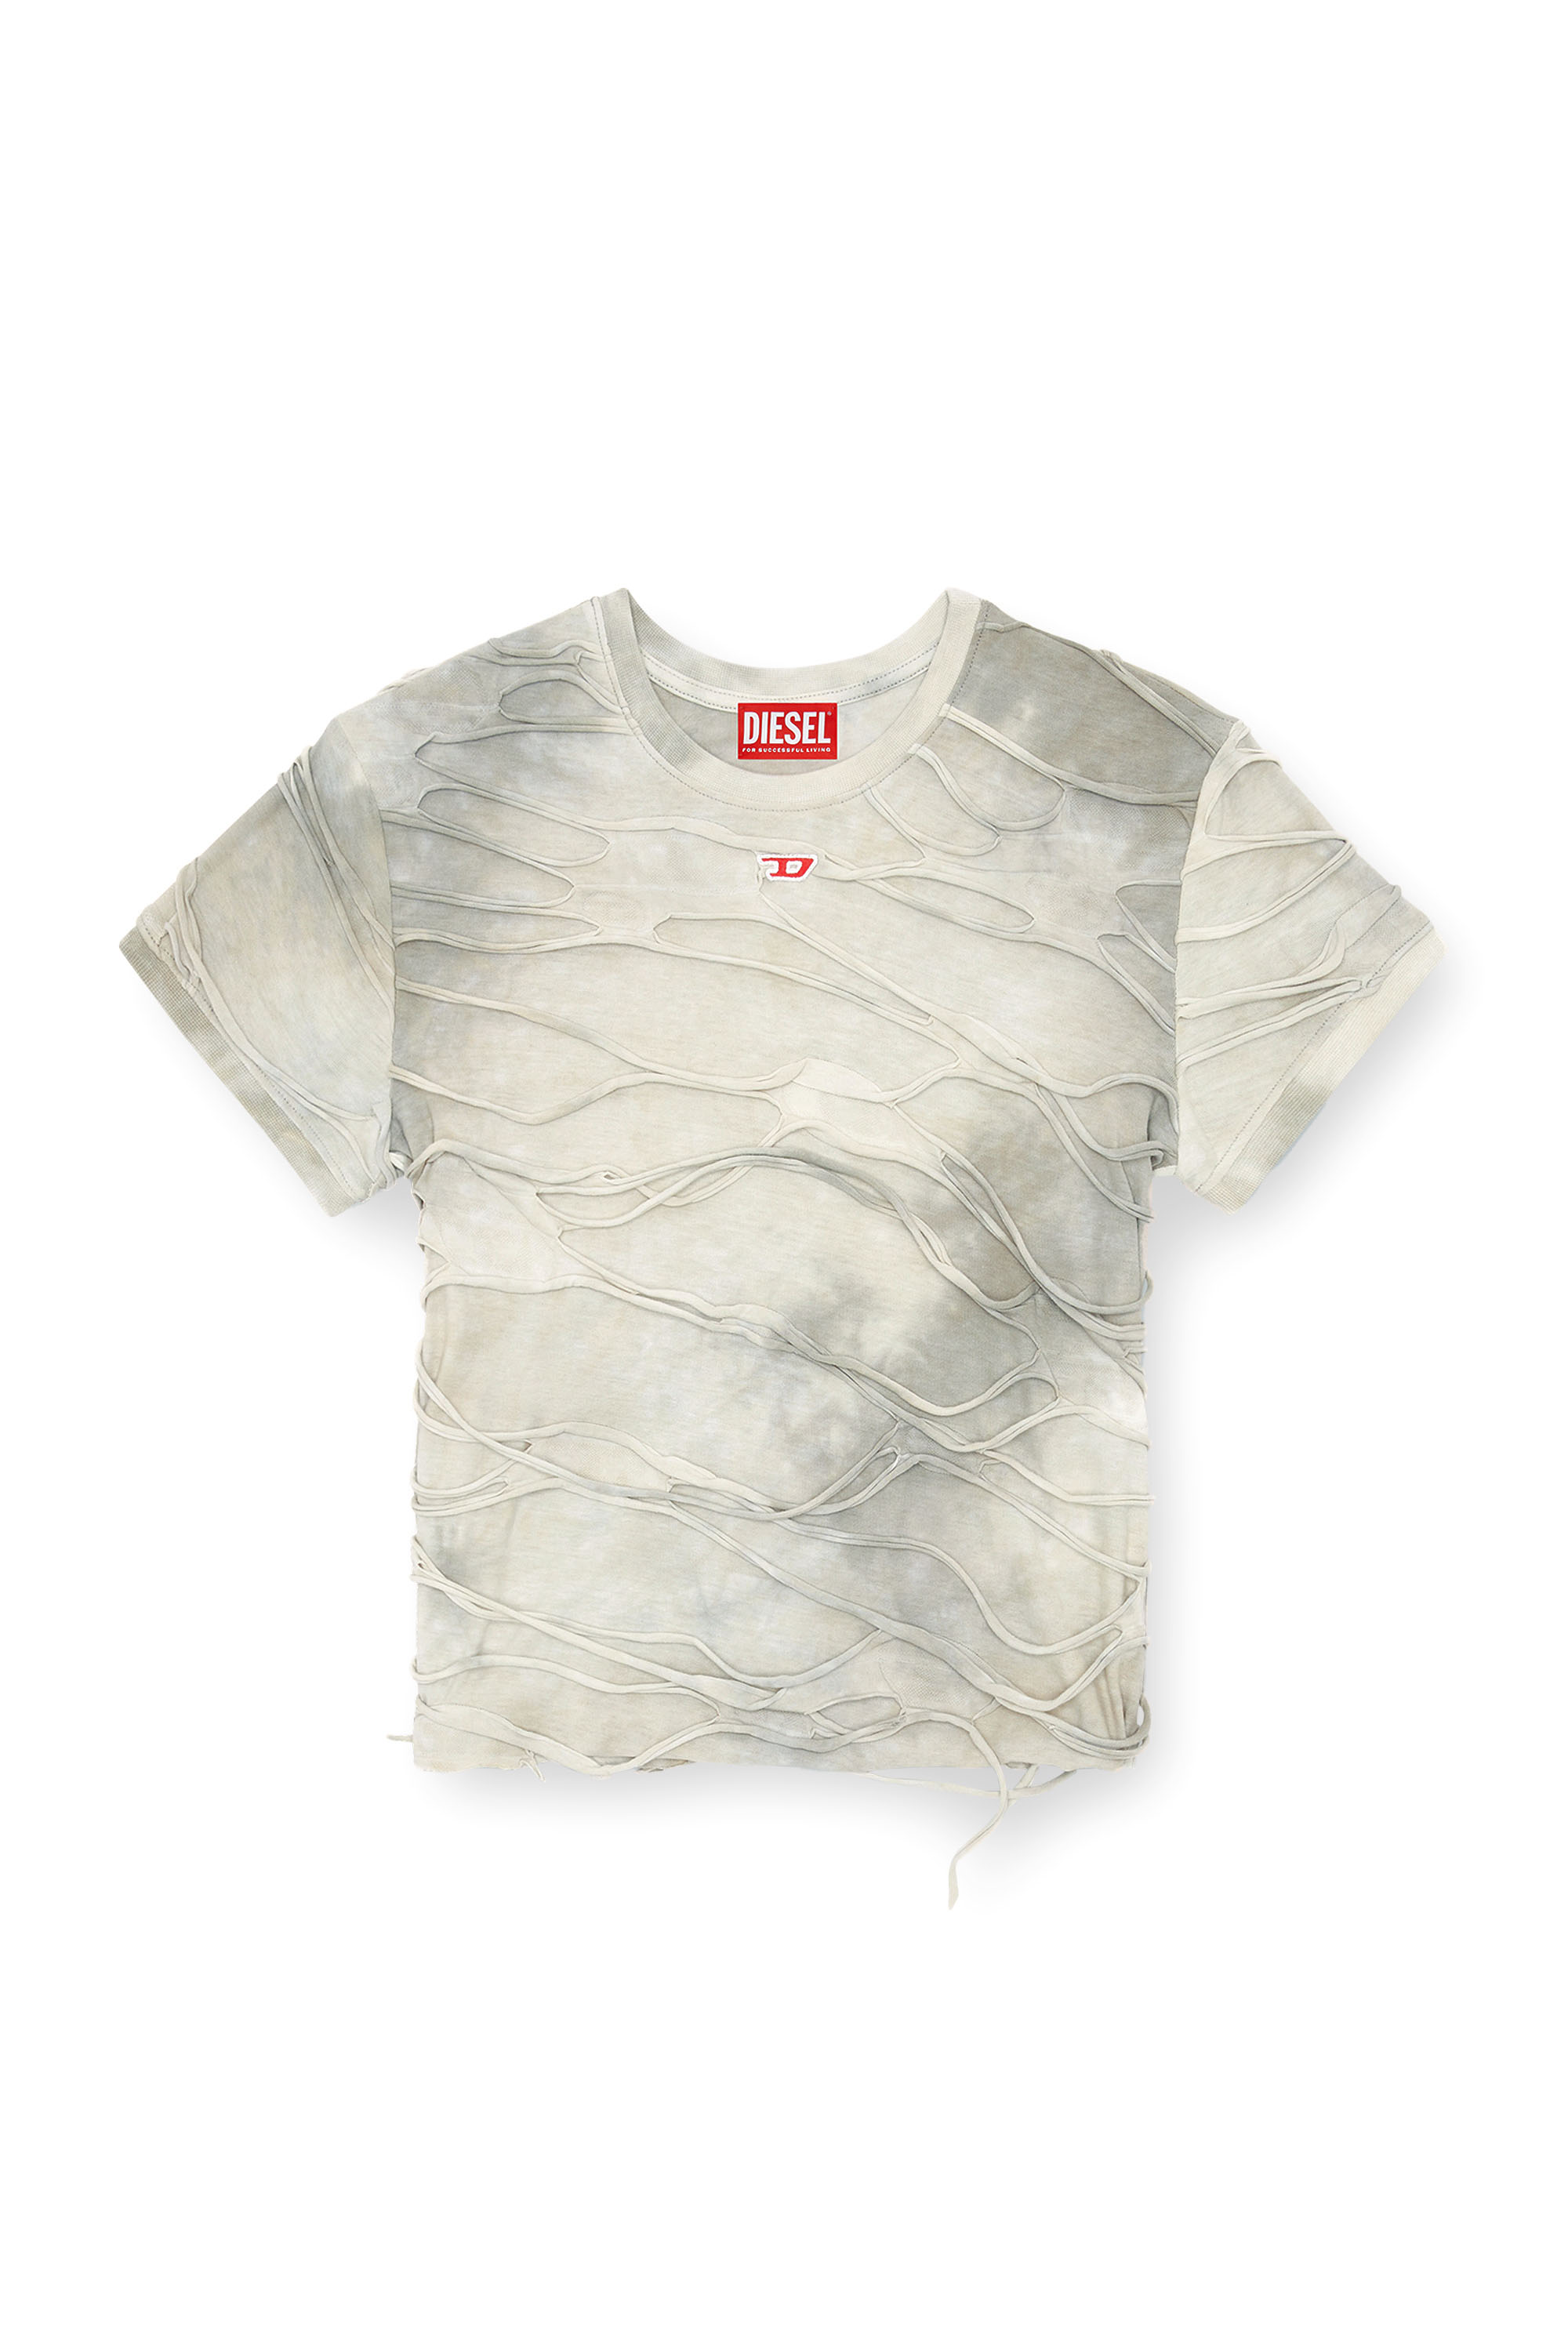 Diesel - T-UNCUTIE-LONG-P1, Mujer Camiseta con hilos flotantes in Gris - Image 4